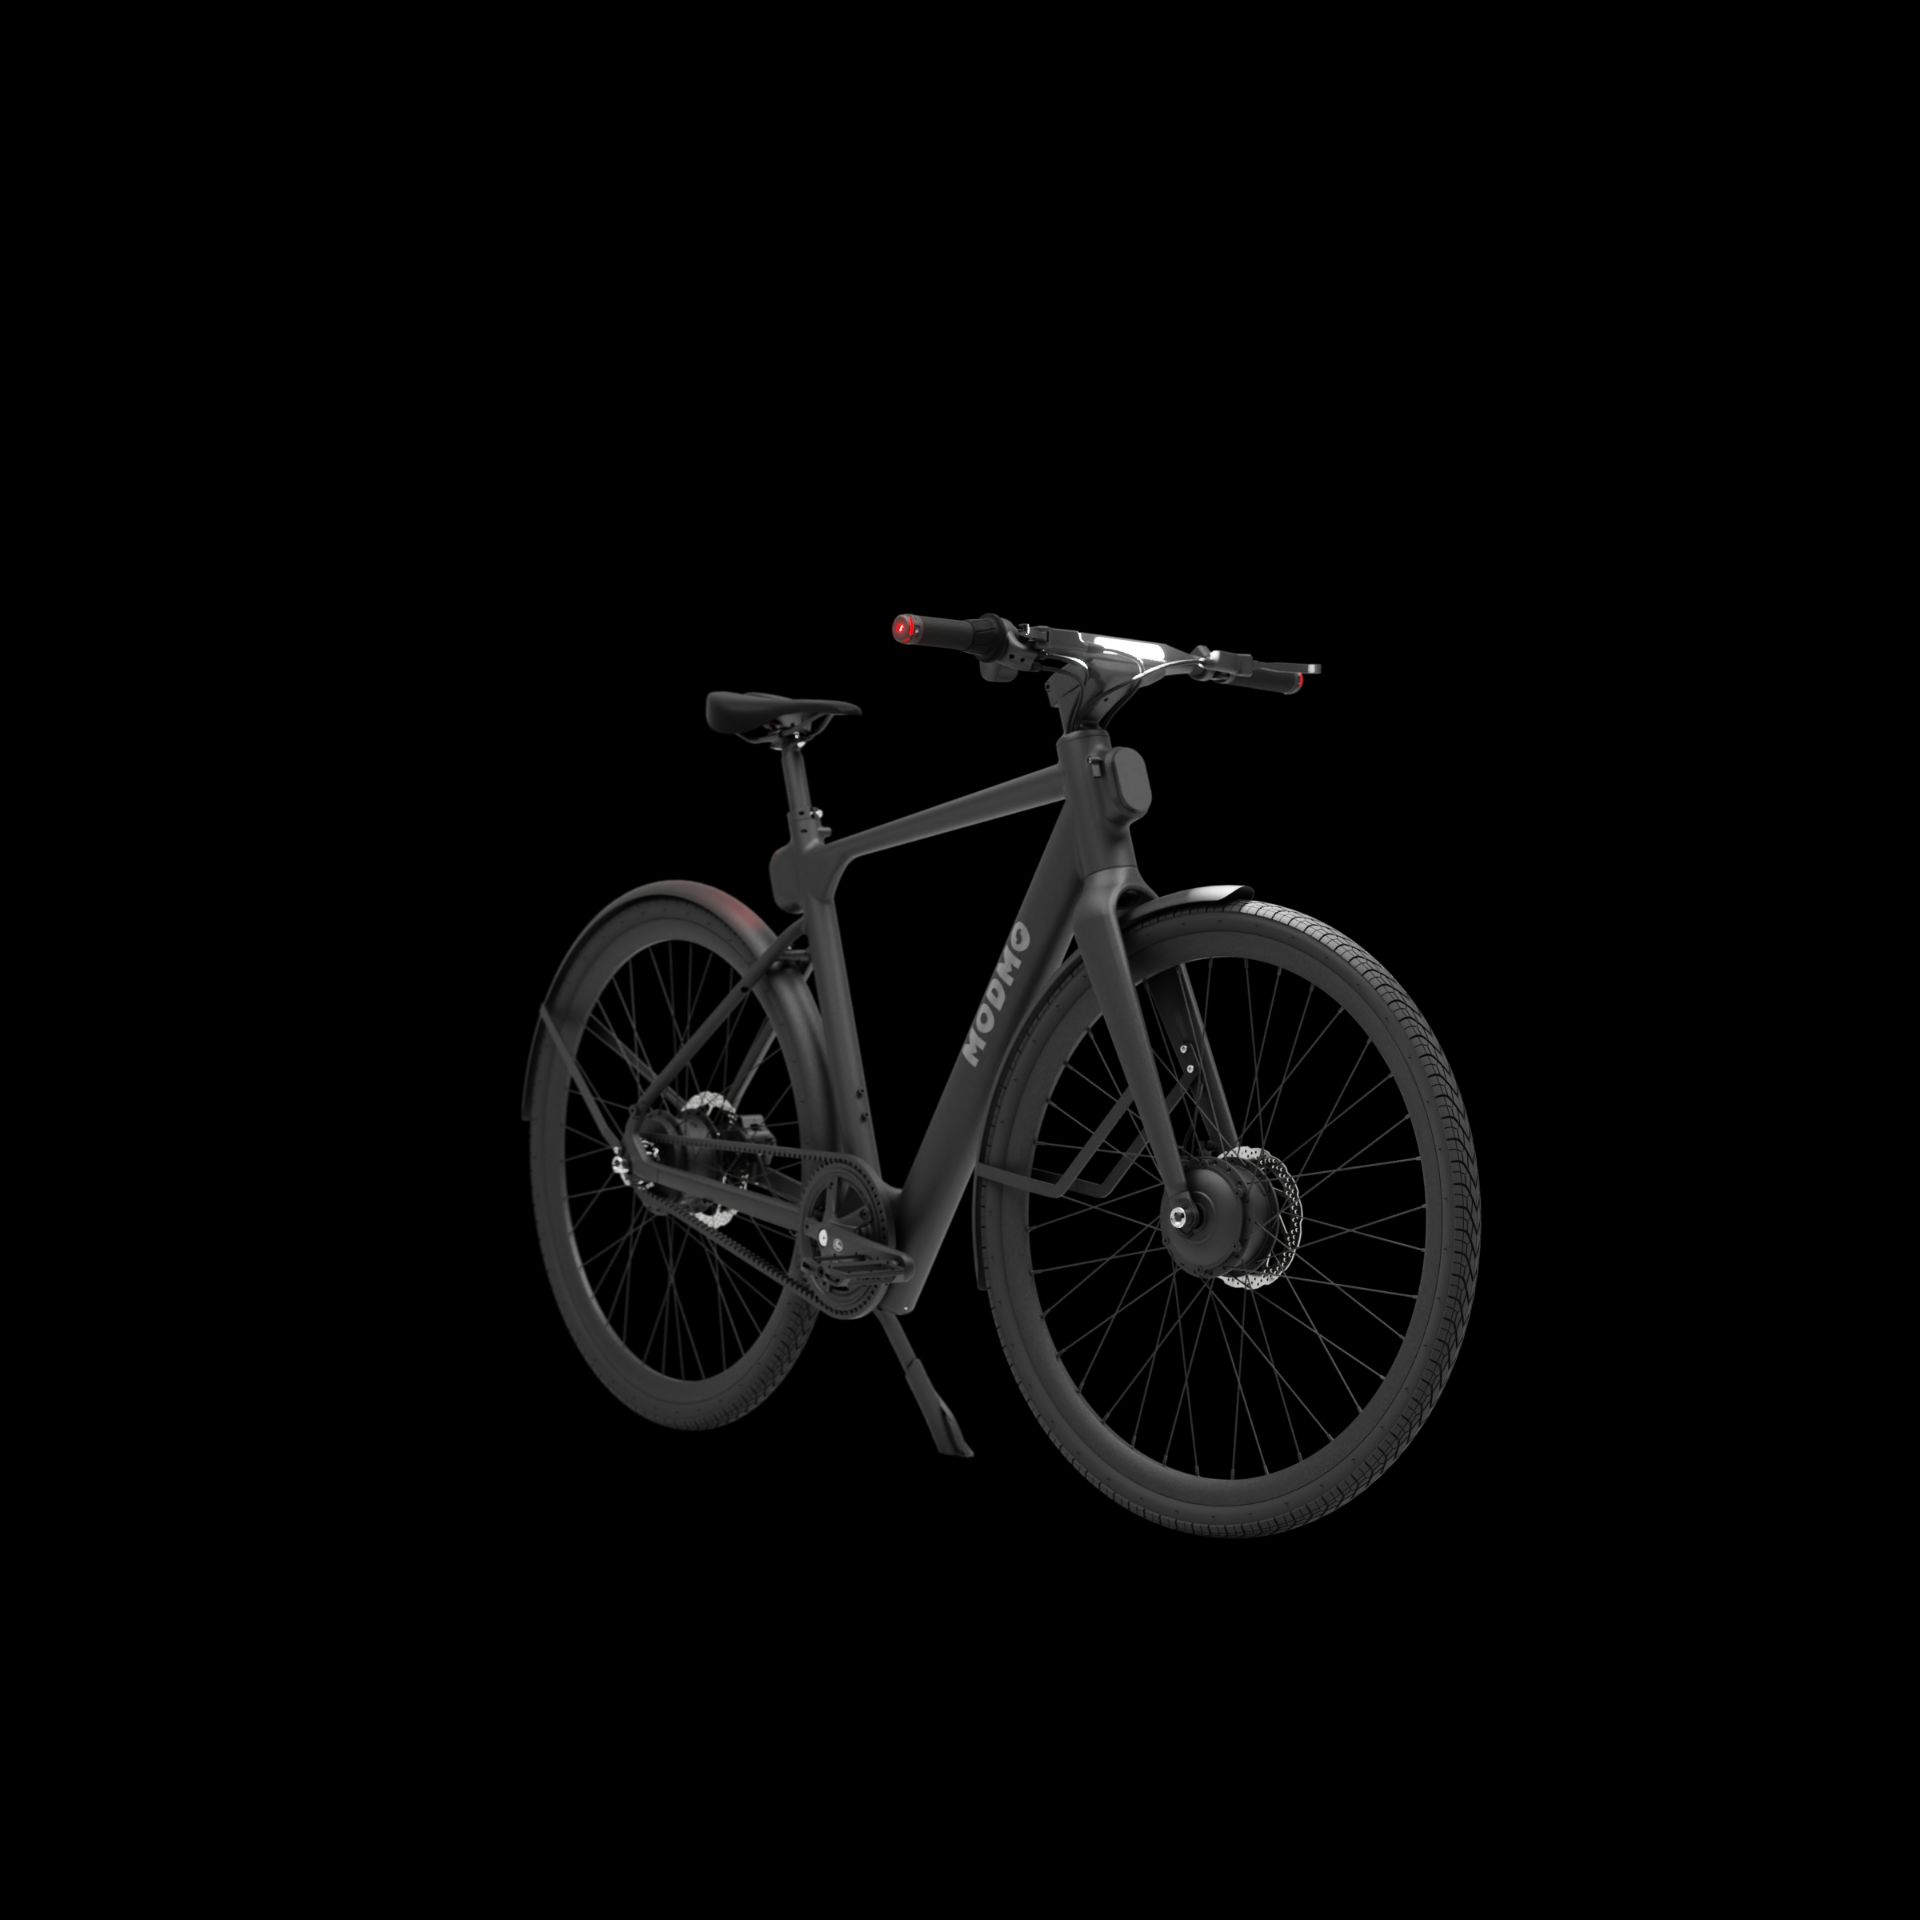 Modmo Saigon+ Electric Bicycle - RRP £2800 - Size S (Rider: 140-155cm) - Image 2 of 19